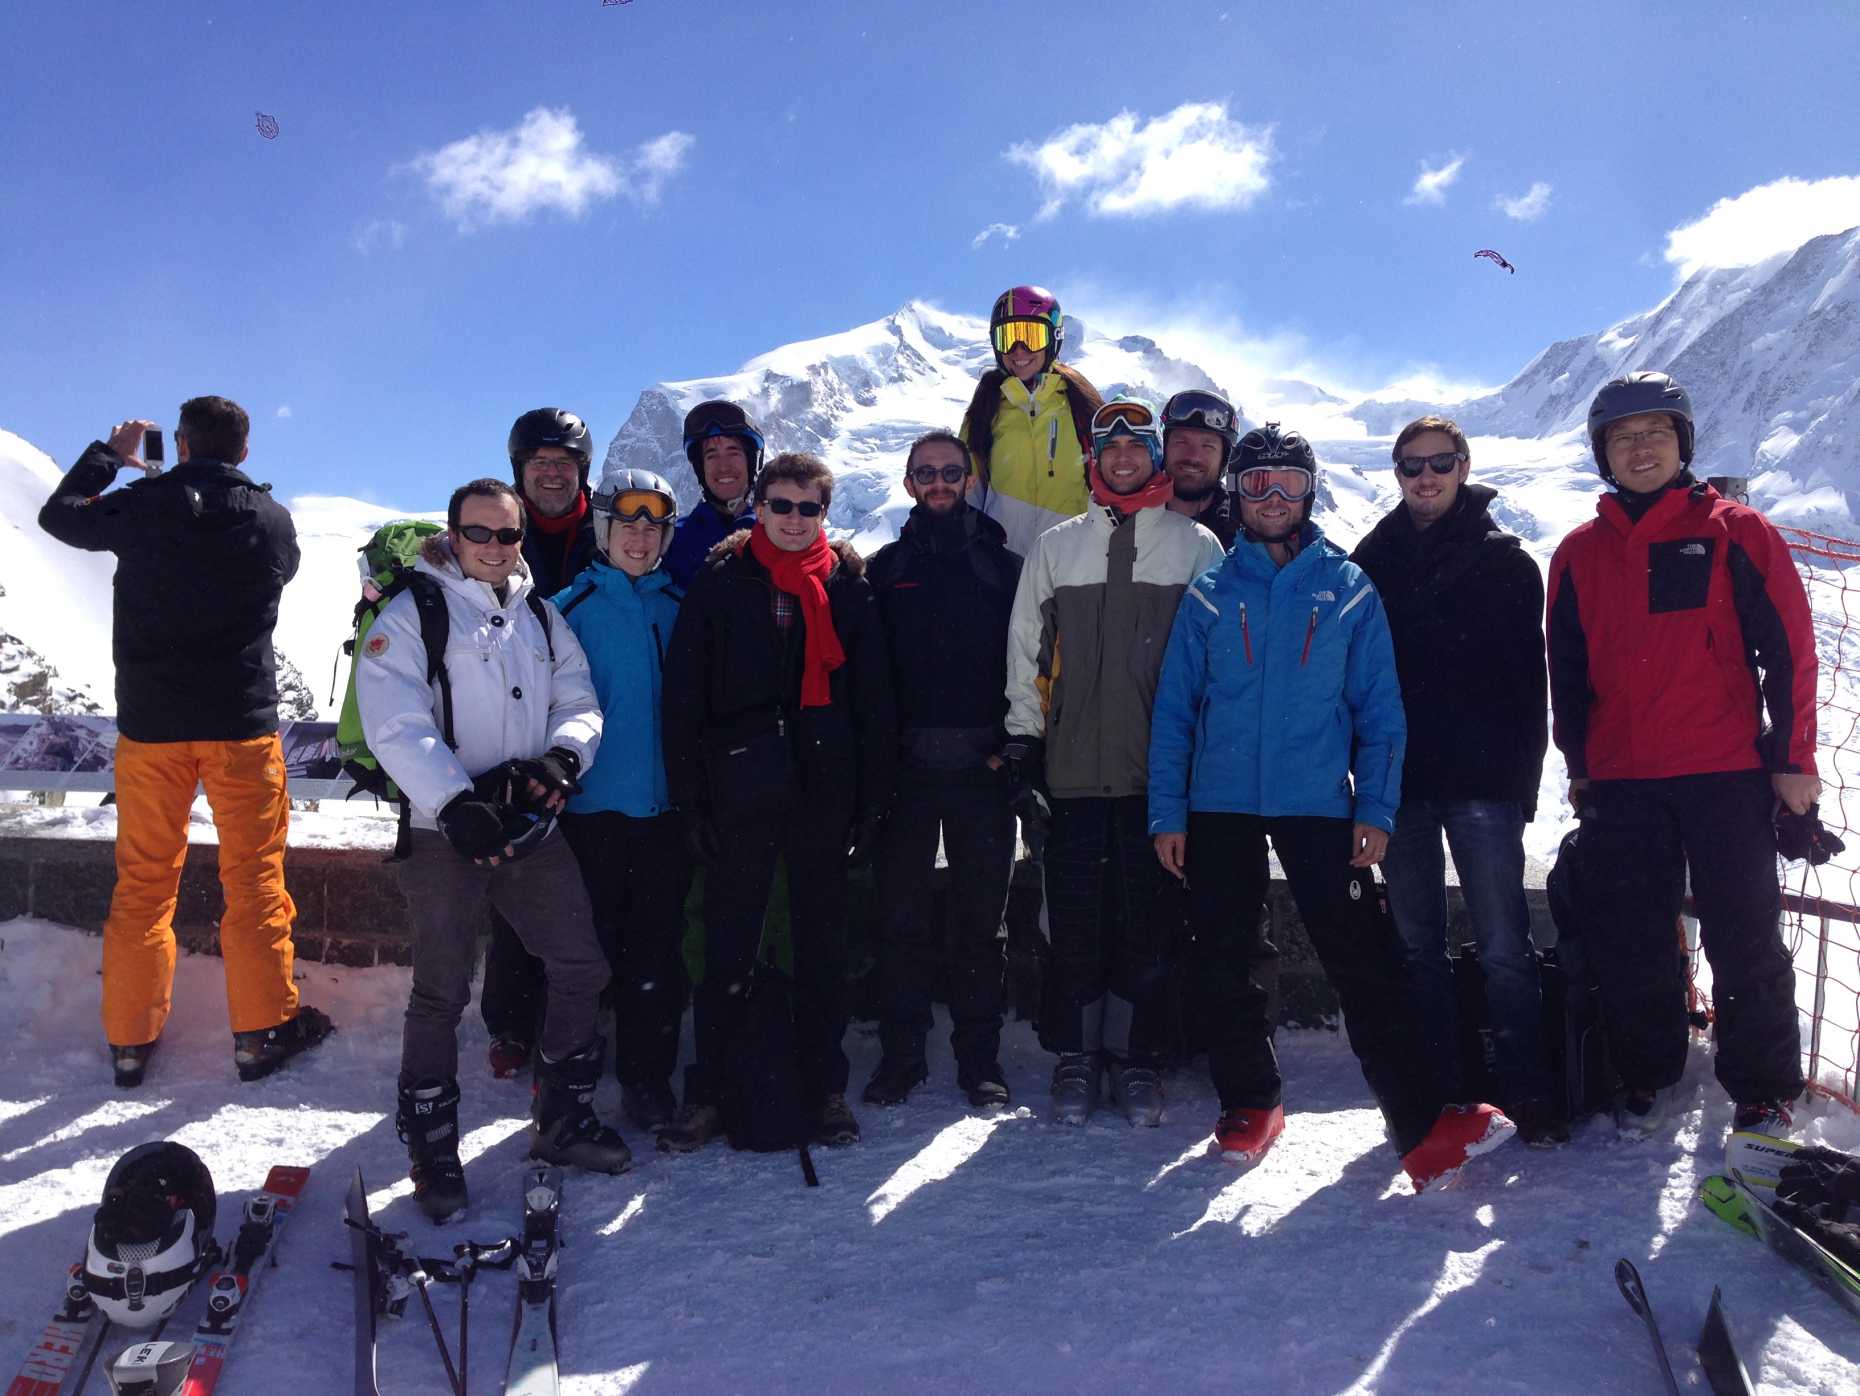 Enlarged view: Group skiing @ Zermatt, 2015